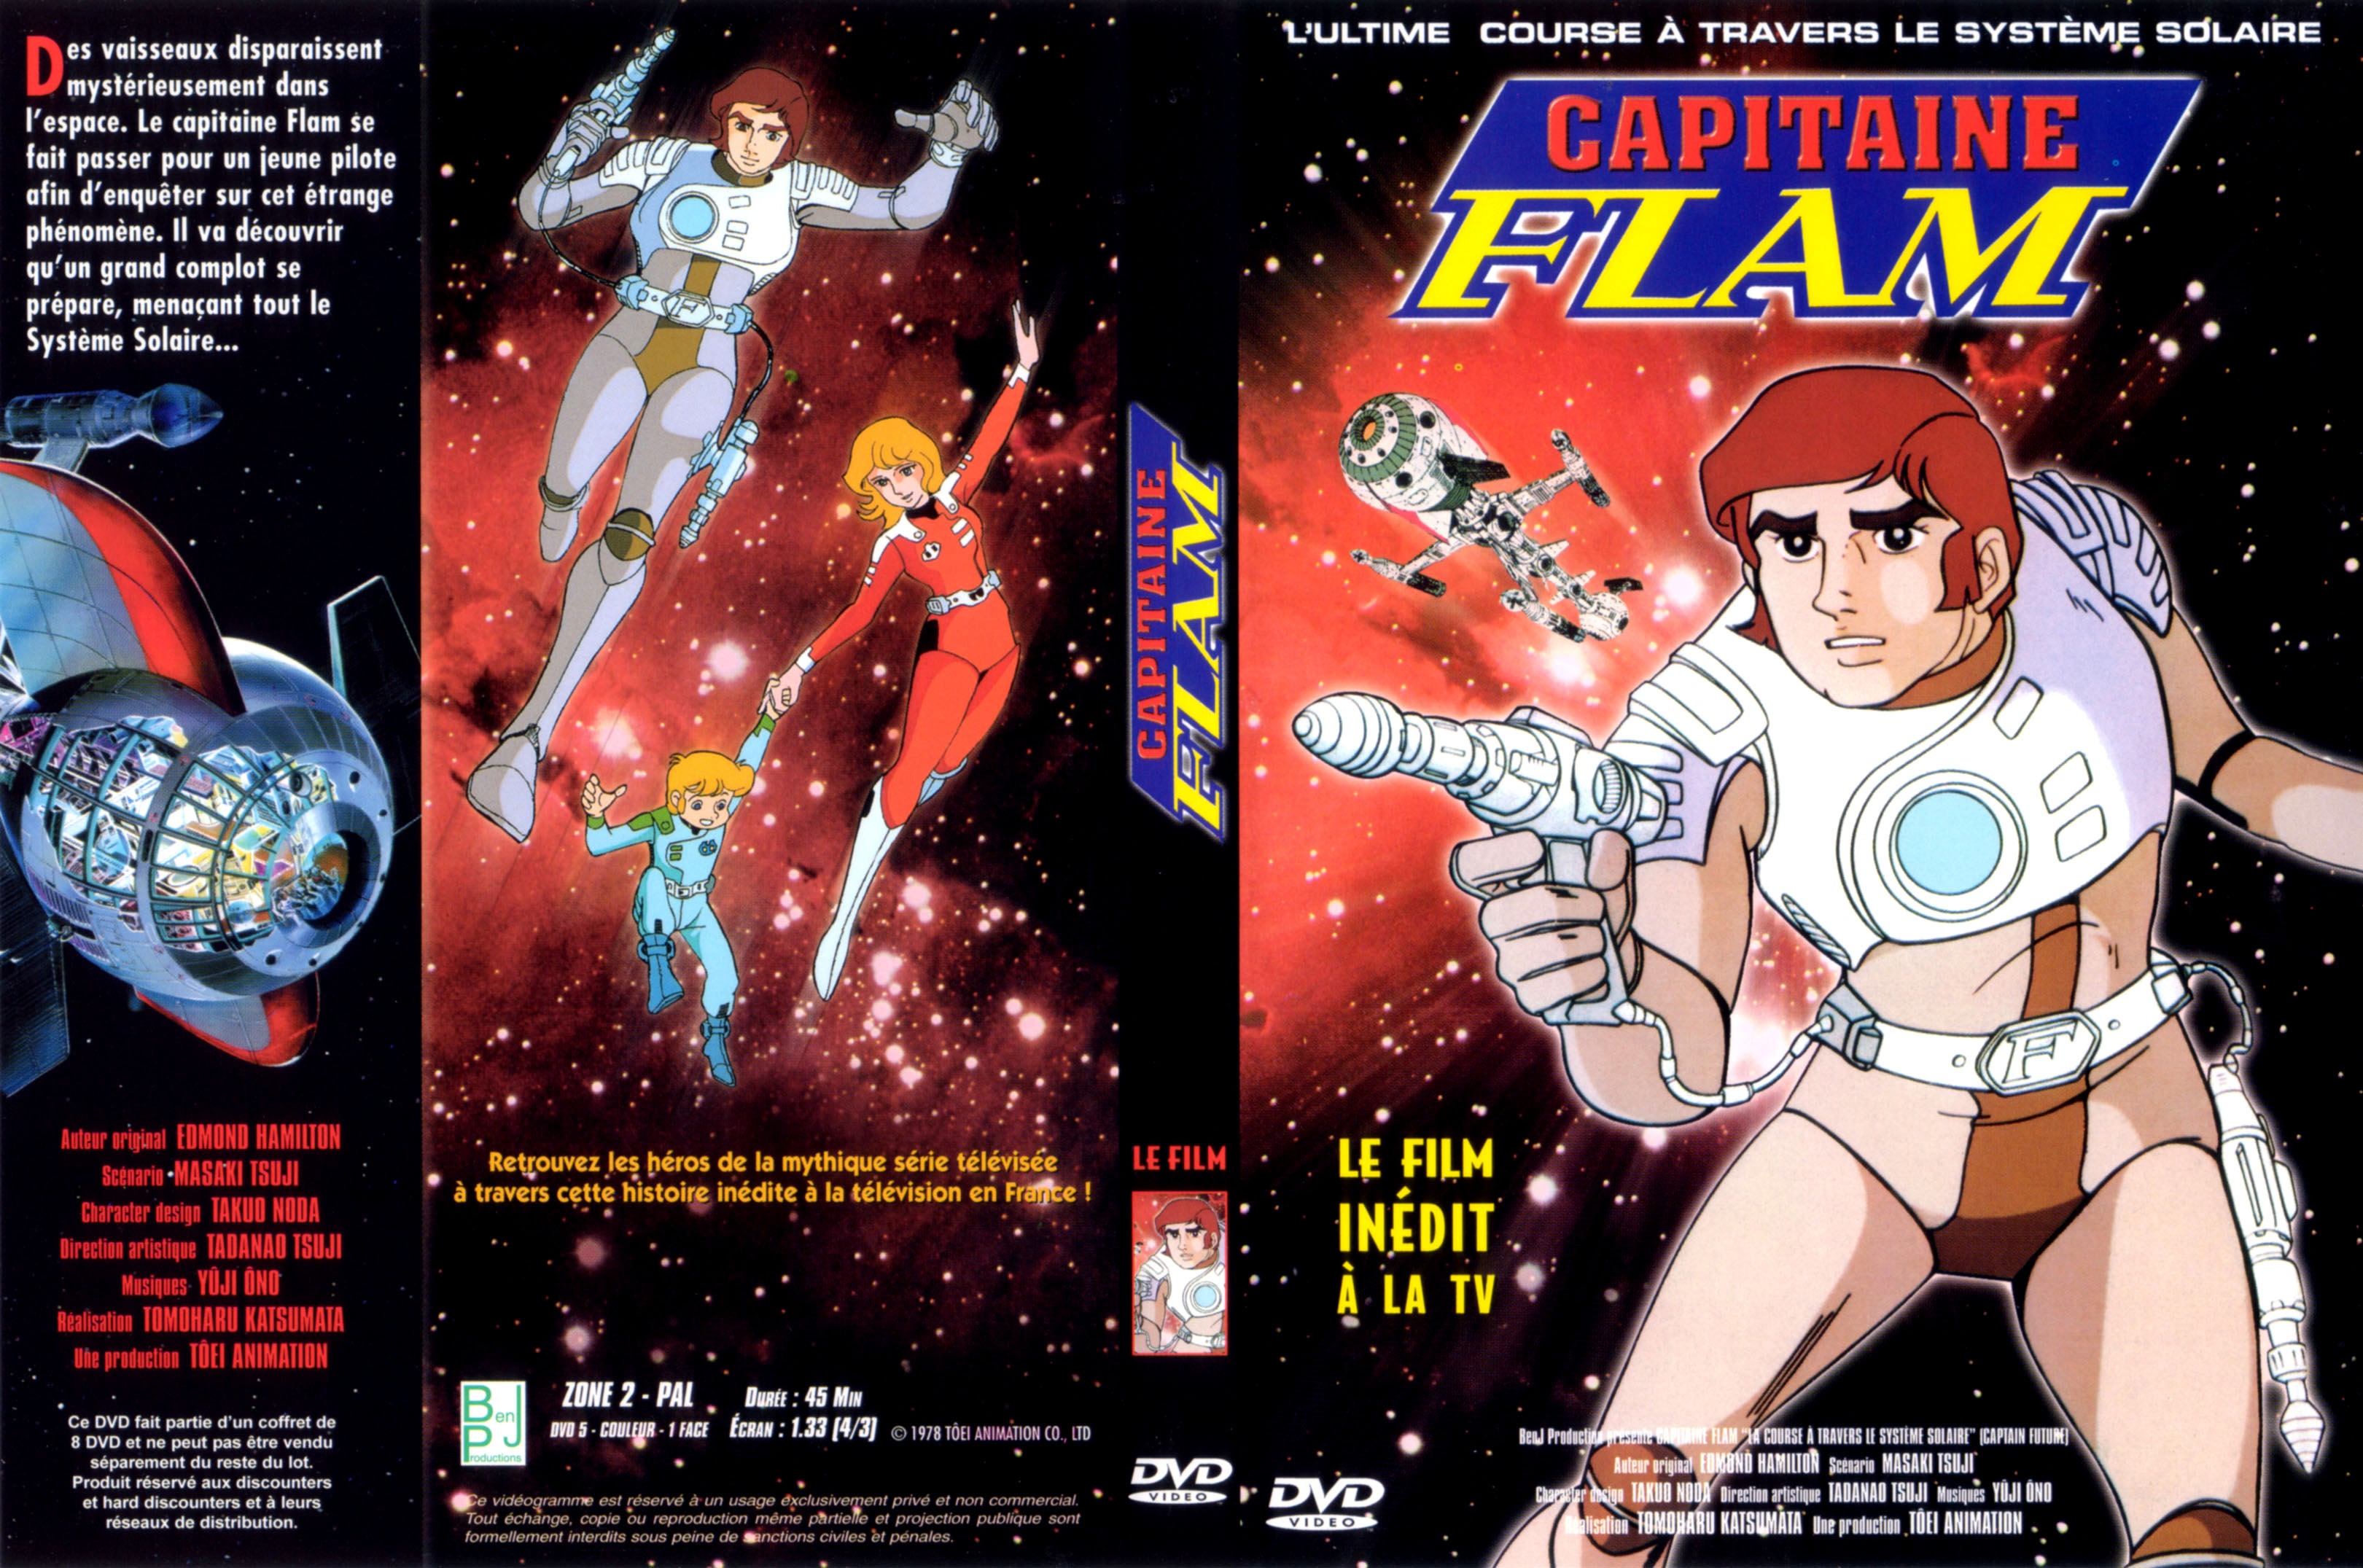 Jaquette DVD Capitaine Flam le film